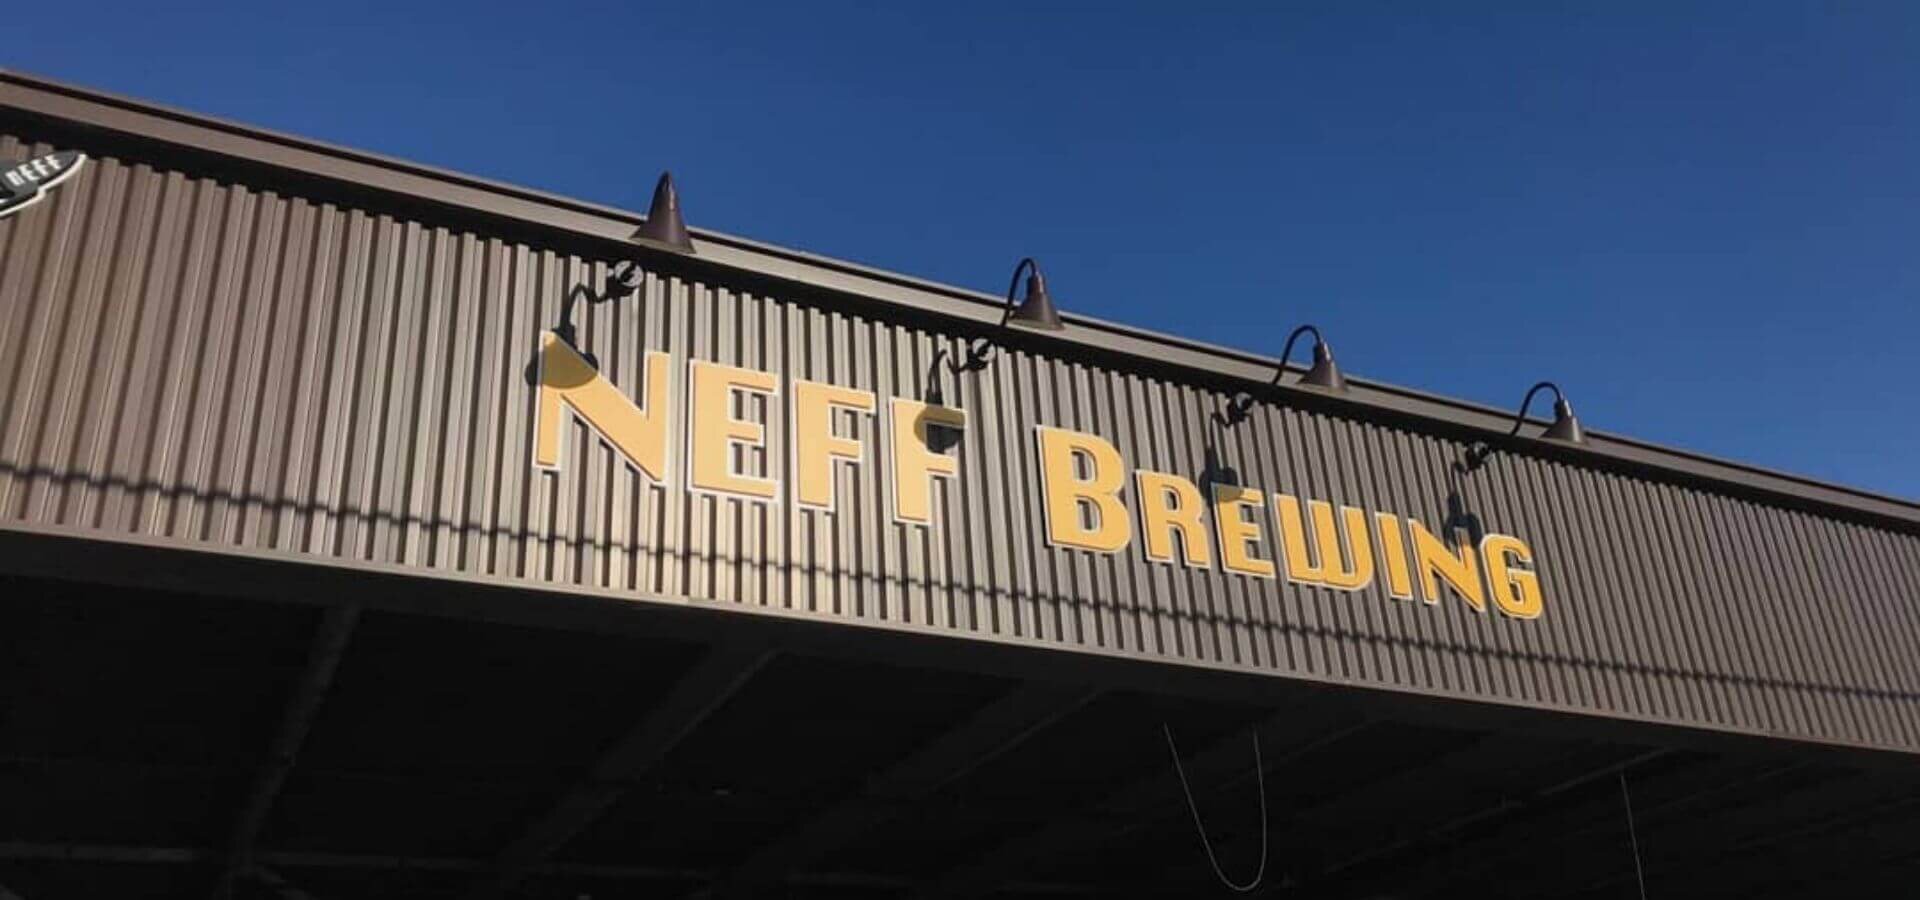 NEFF Brewing in Downtown Tulsa OK.jpg